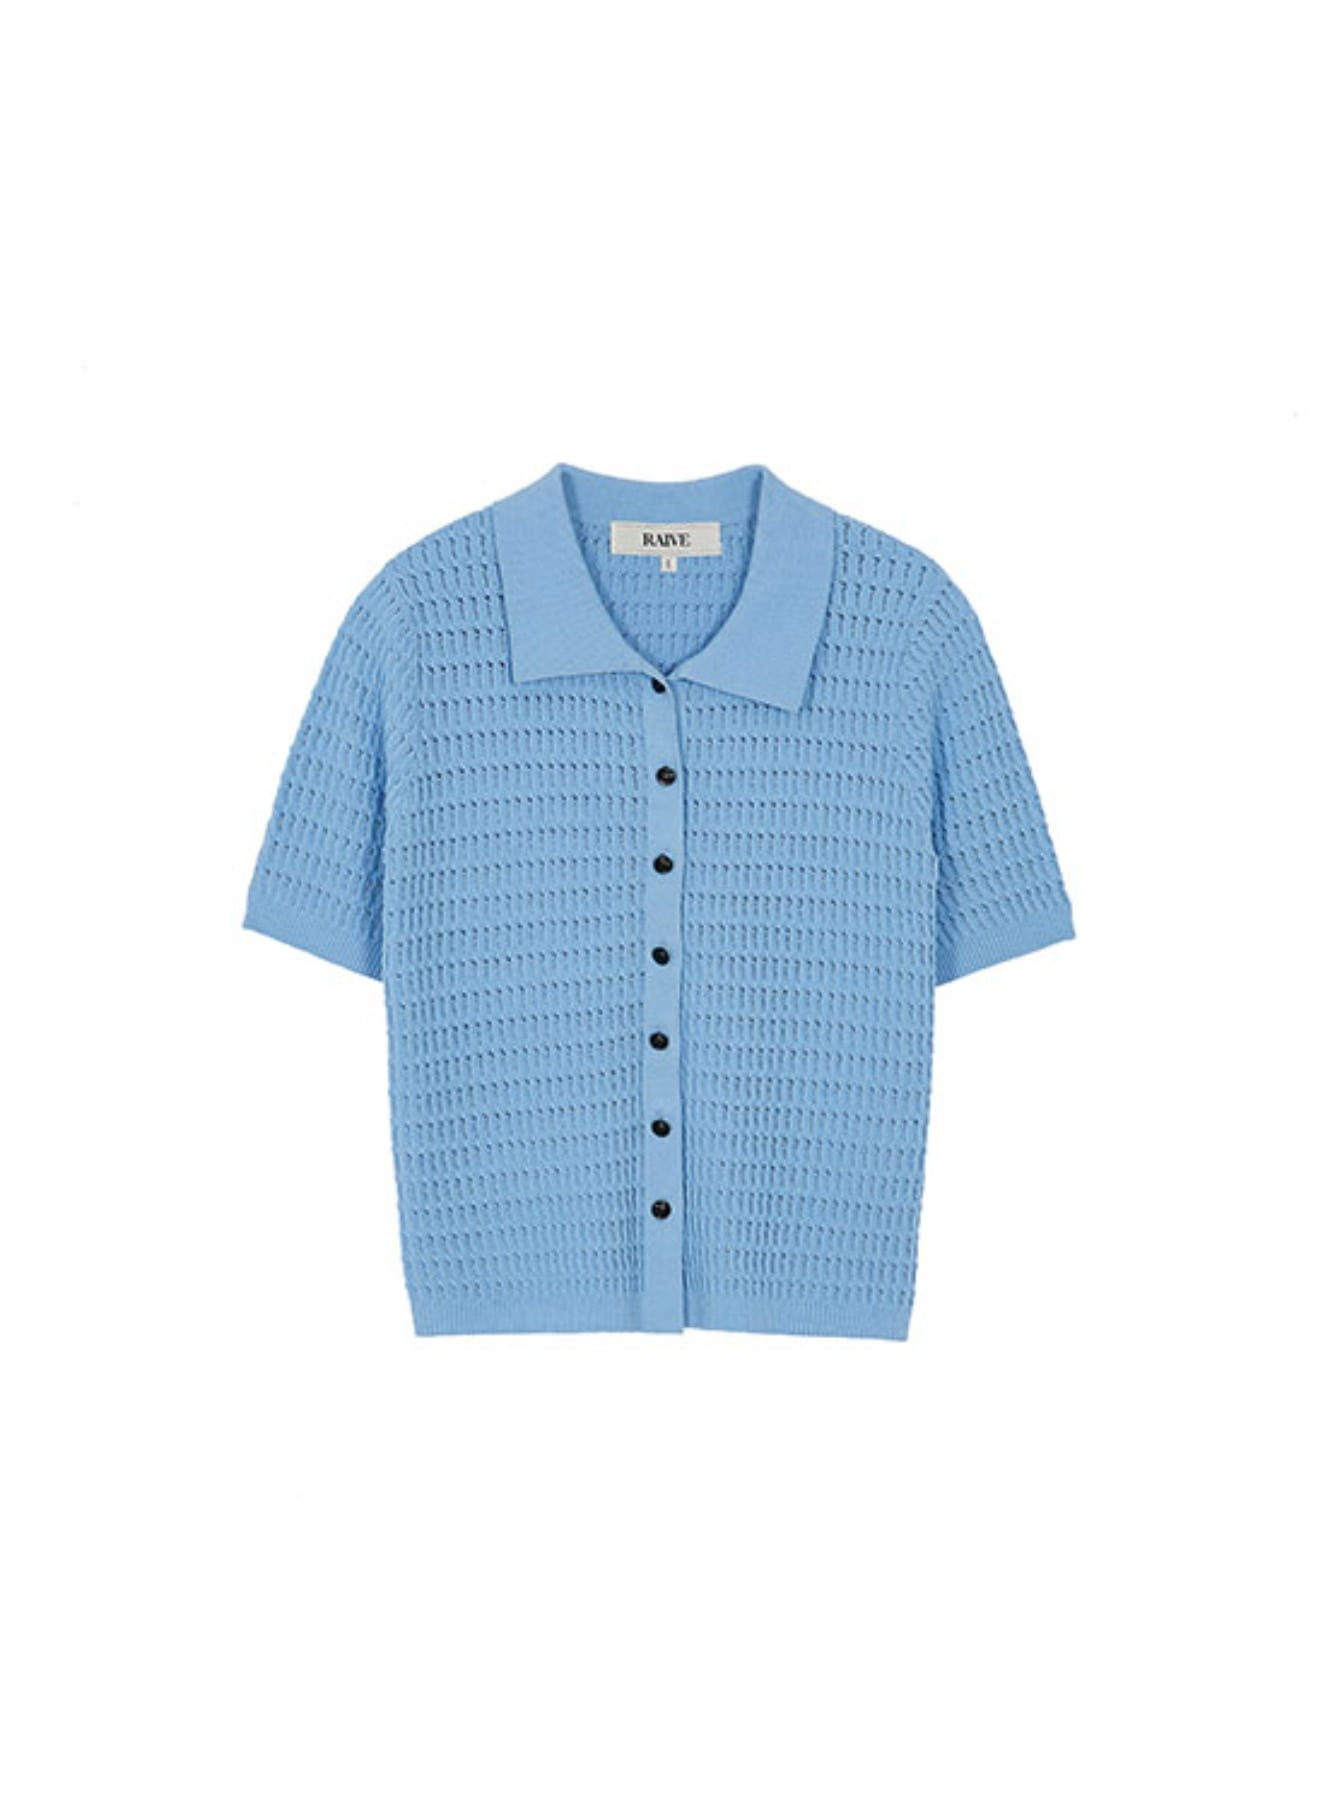 Collar Shirt knit Top in Blue VK2MP148-22